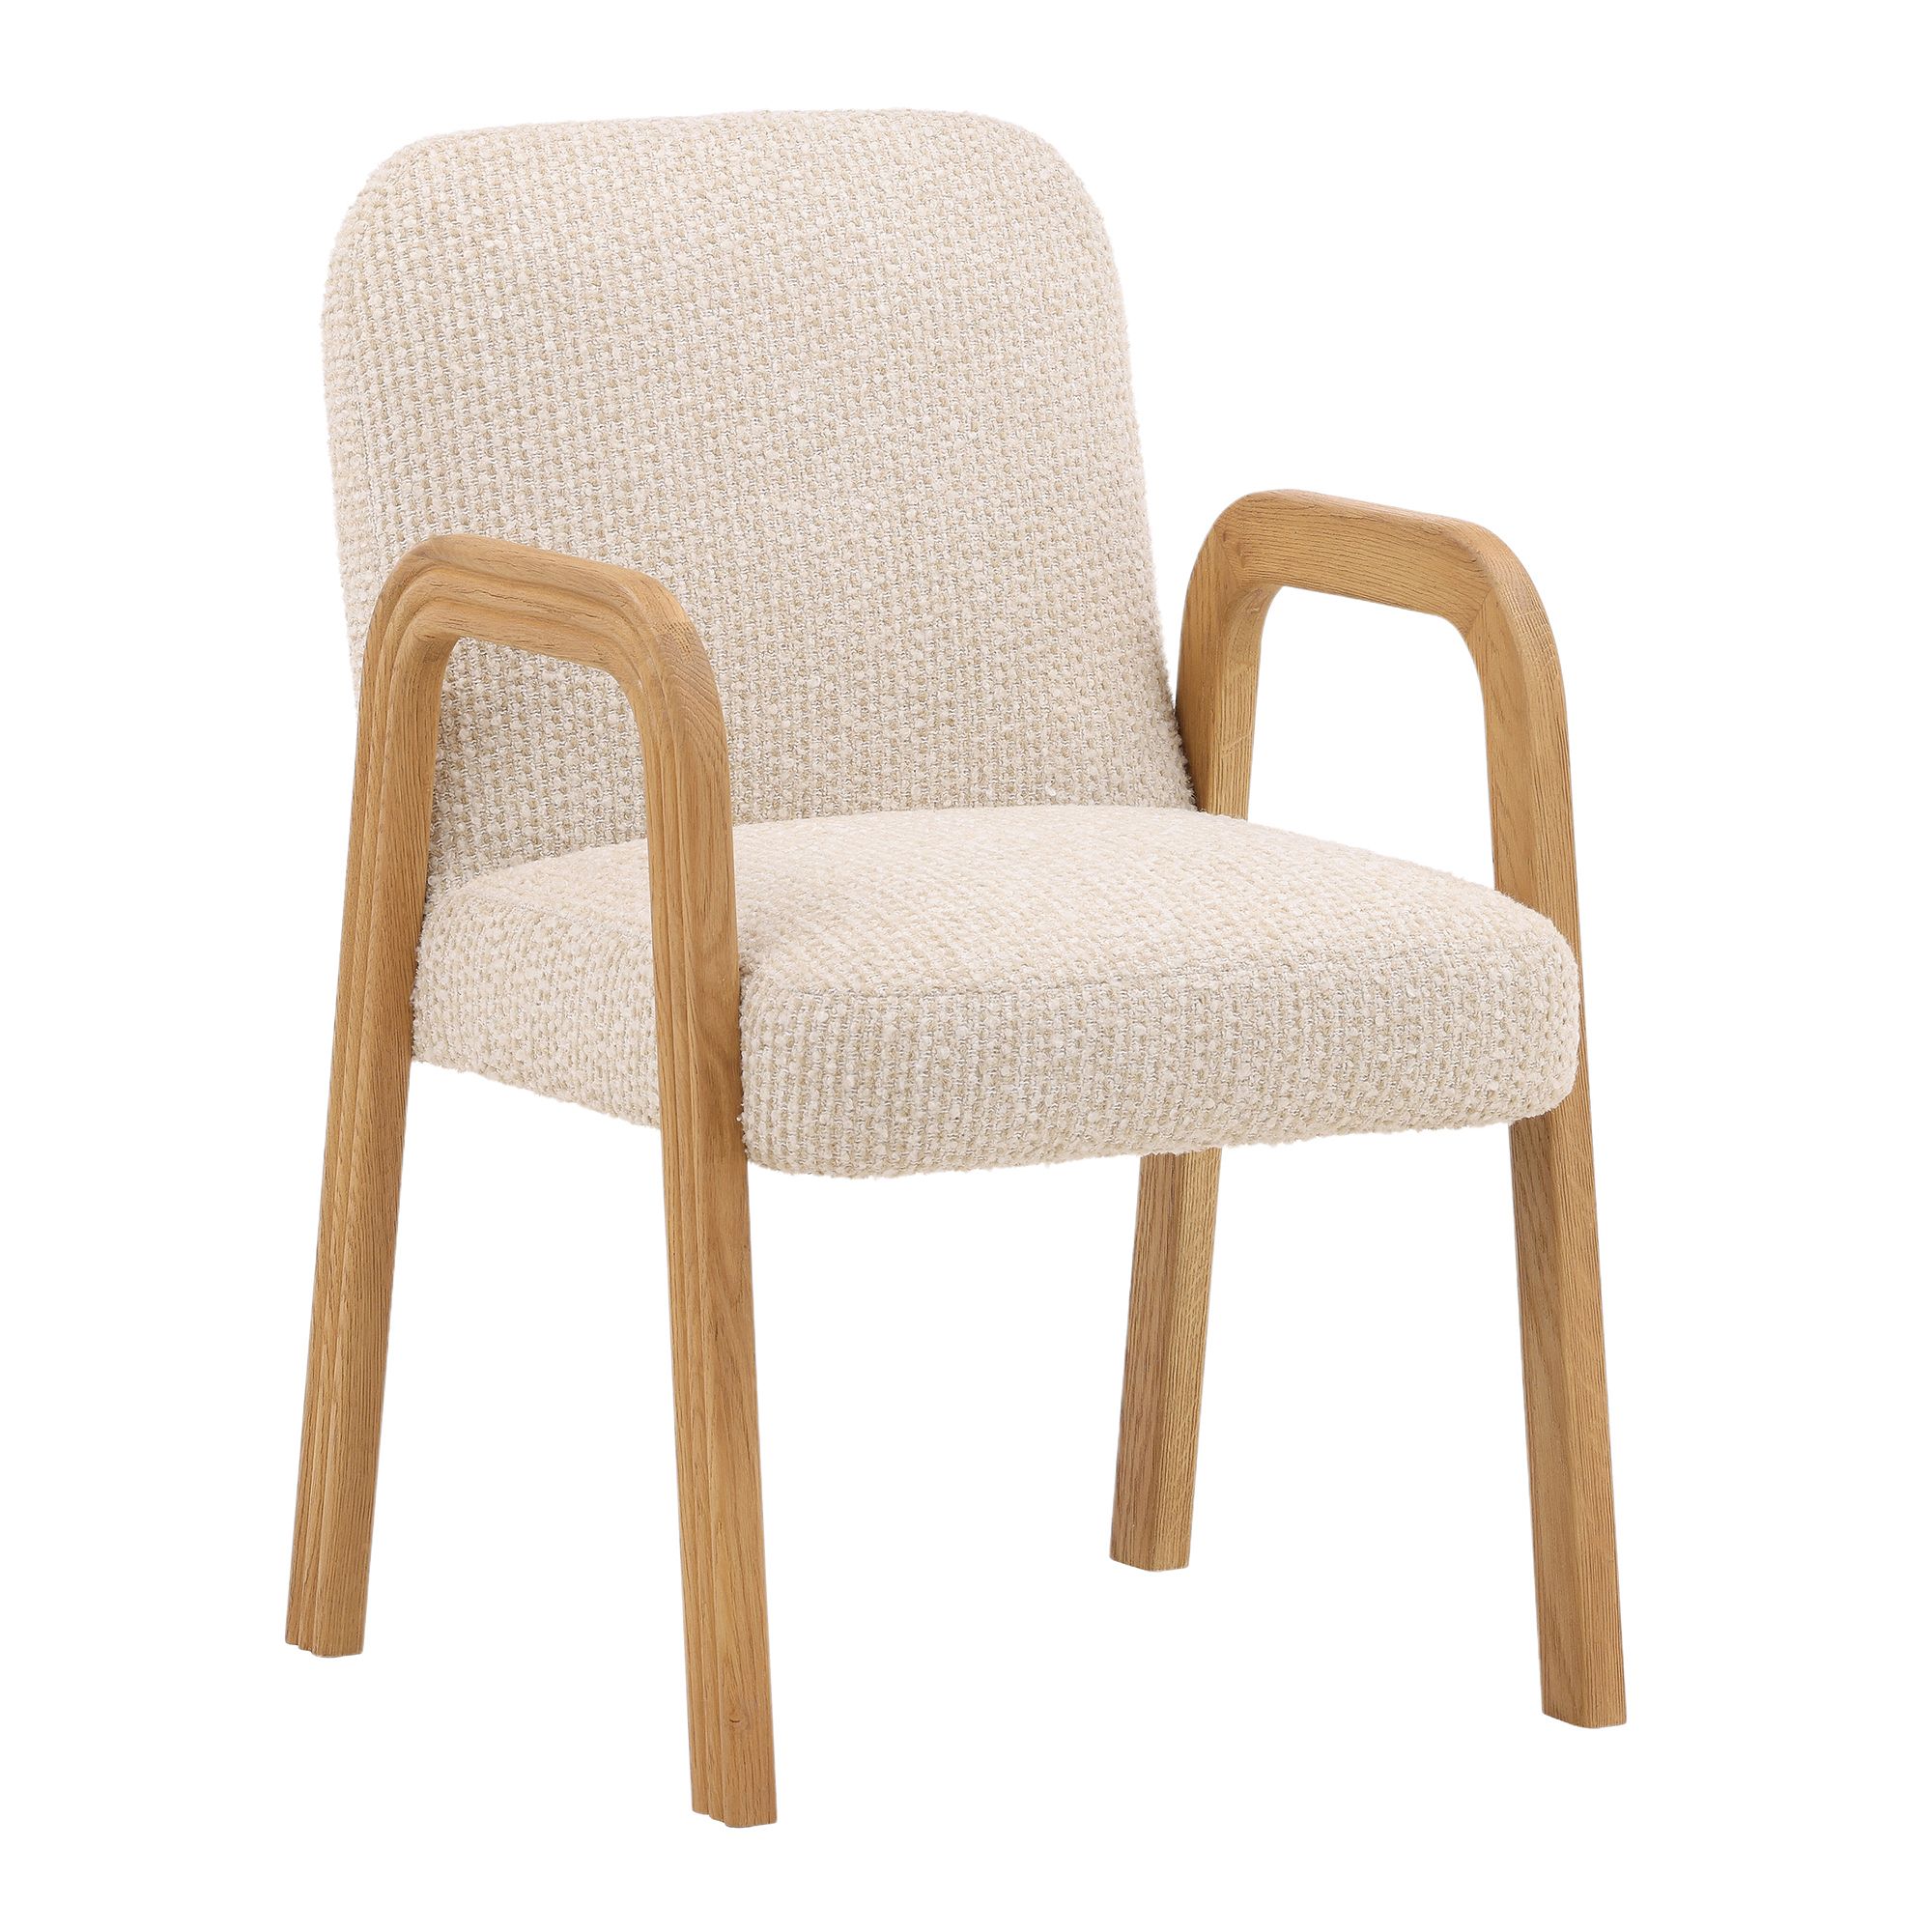 Bainbridge Upholstered Dining Chair | West Elm